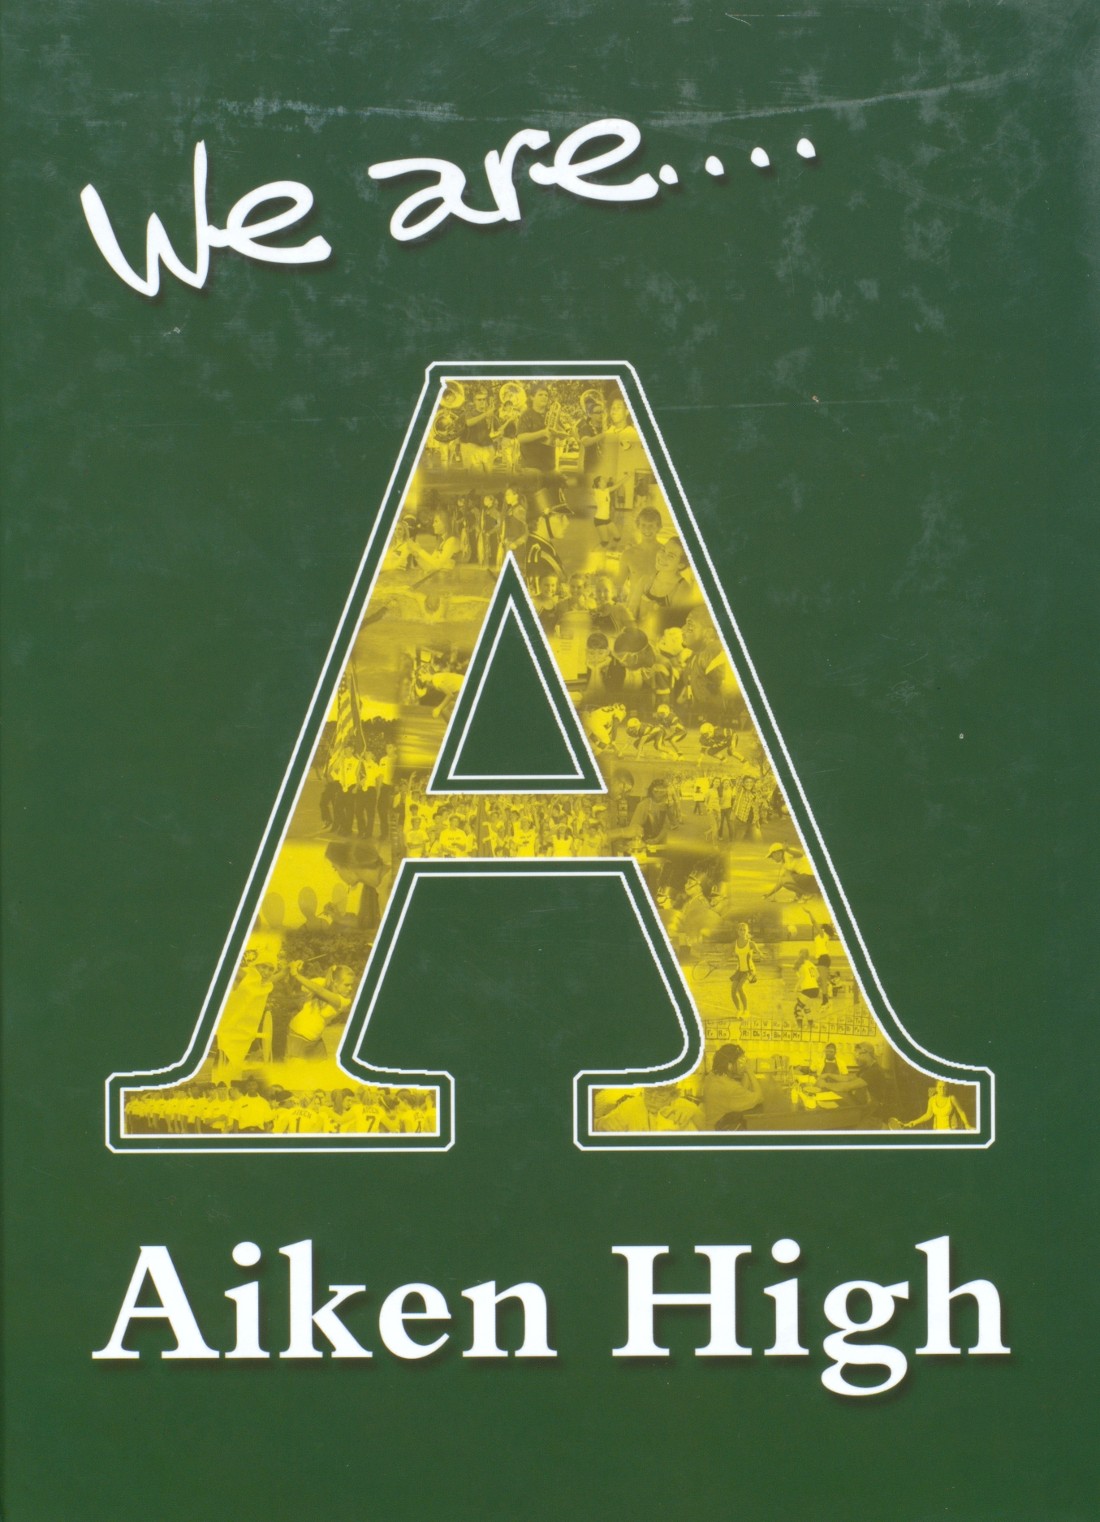 2011 yearbook from Aiken High School from Aiken, South Carolina for sale